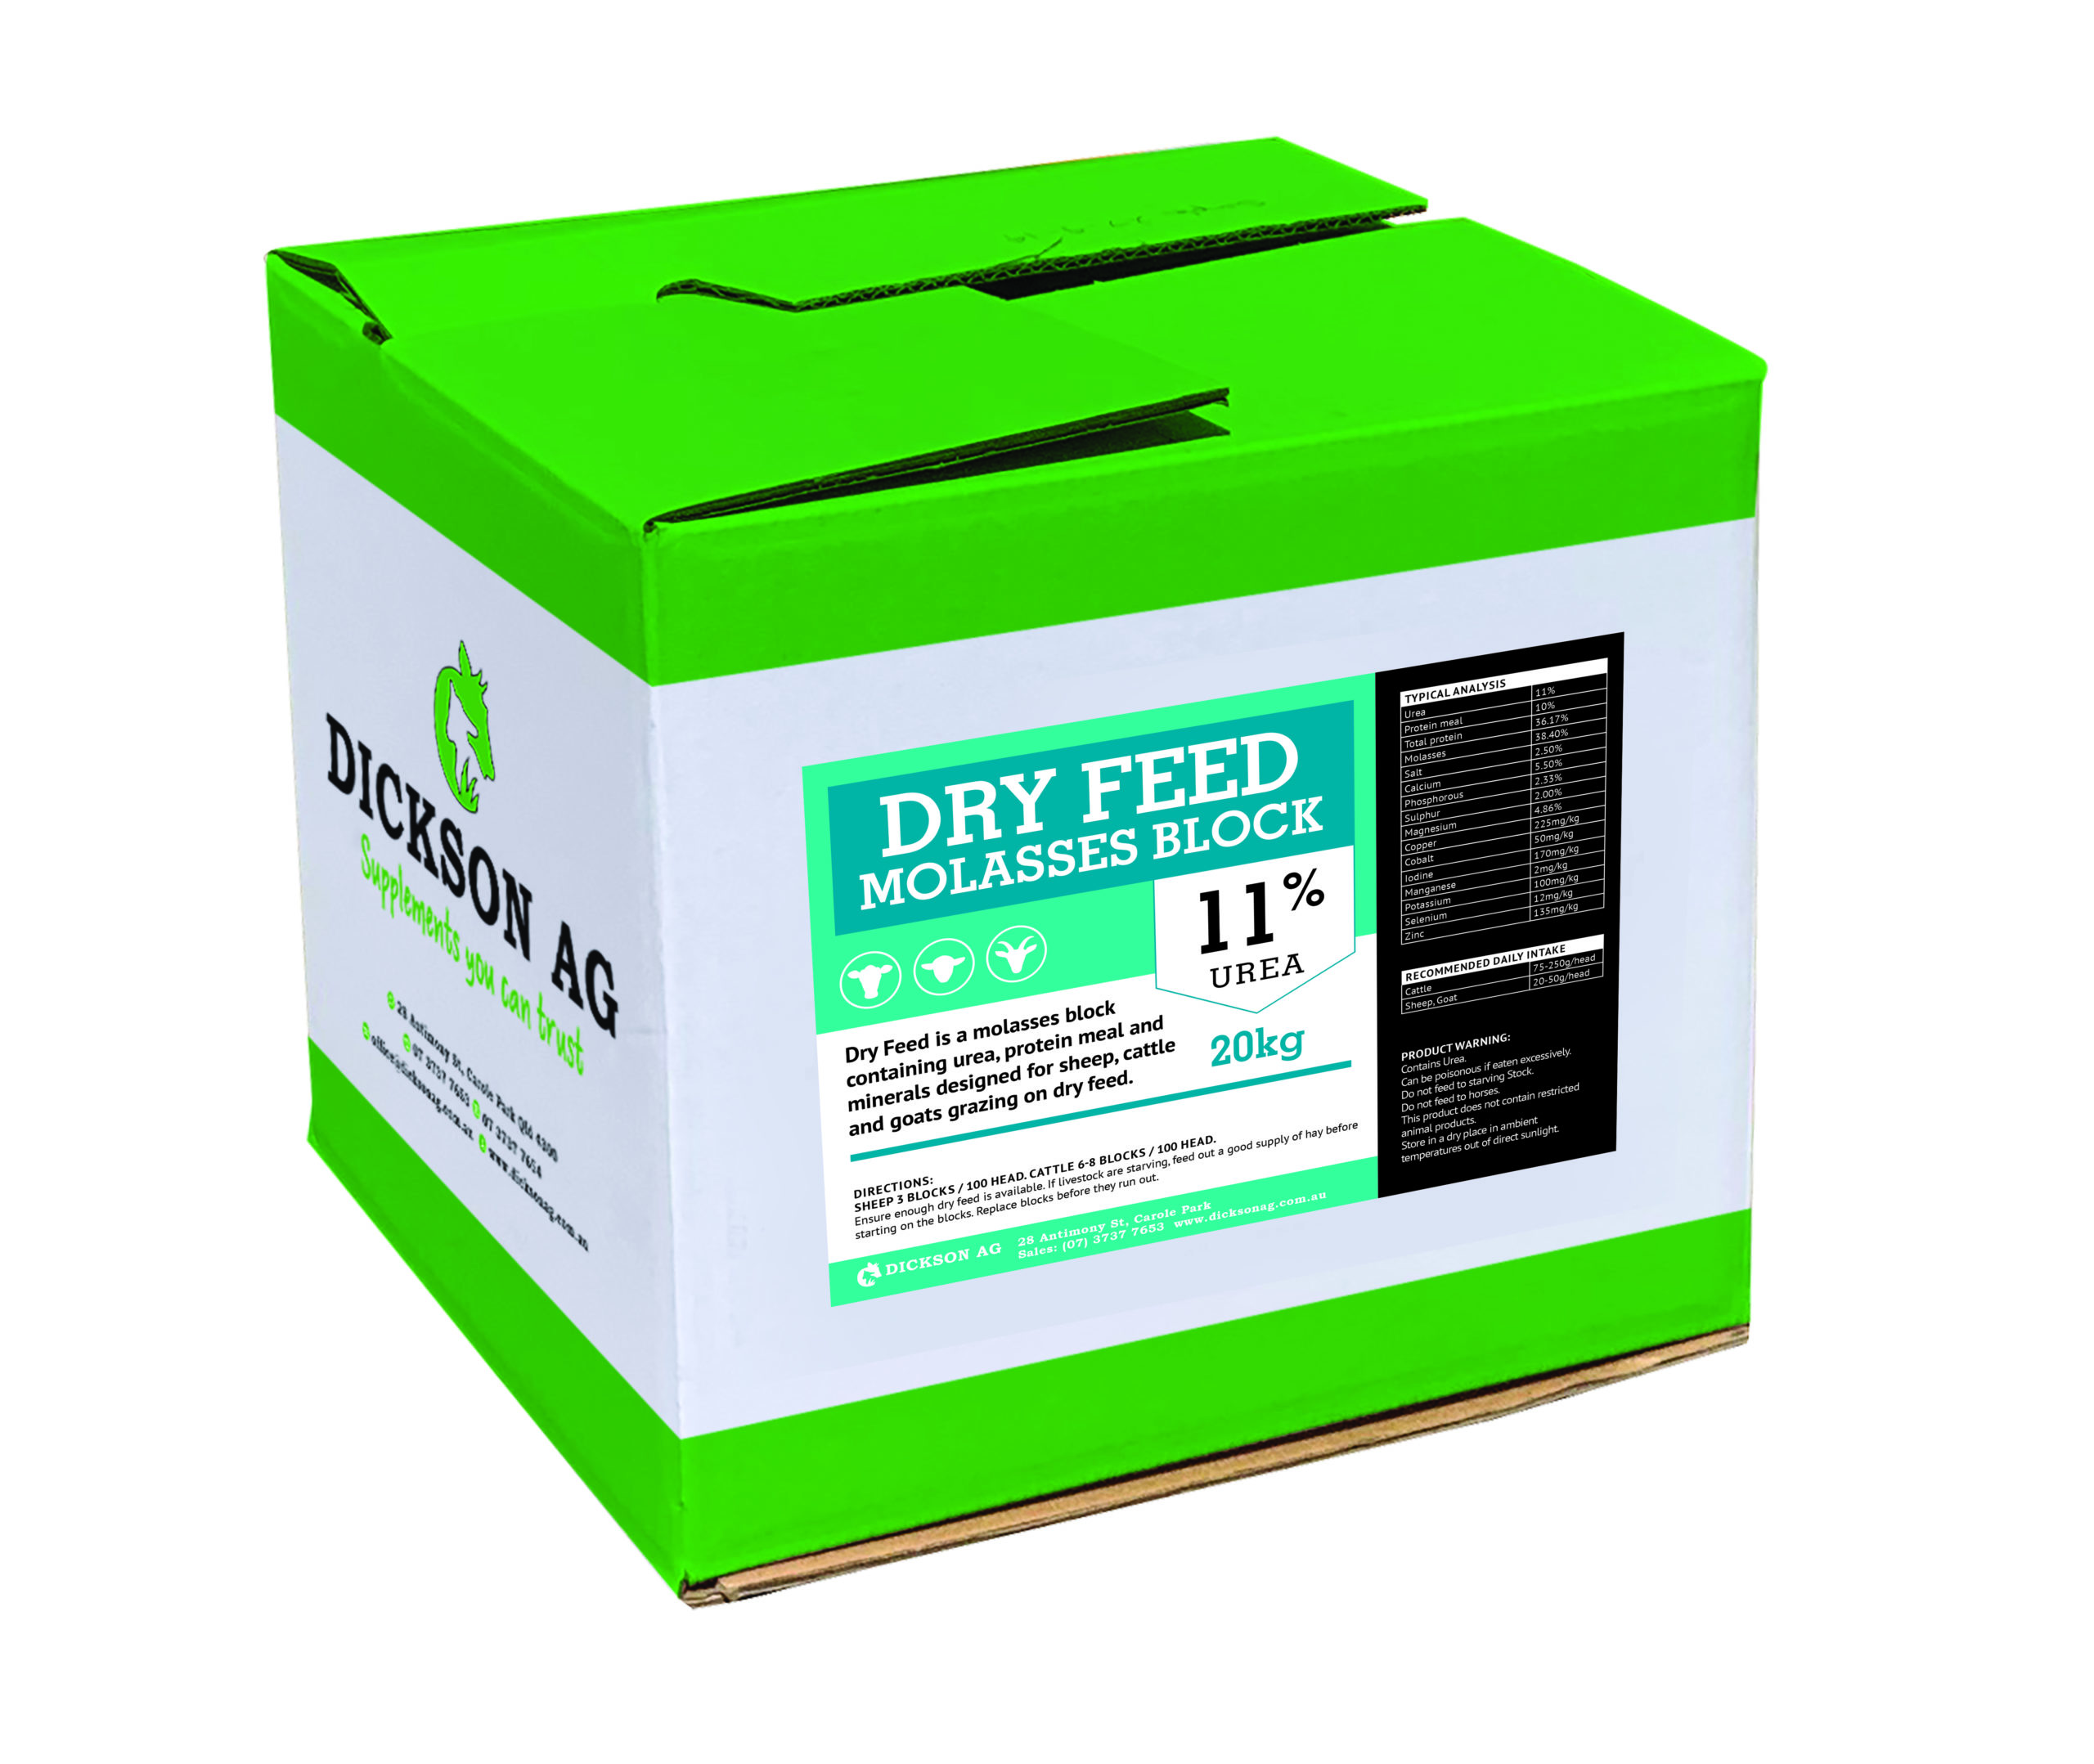 Dry Feed 11% Urea 20Kg Box